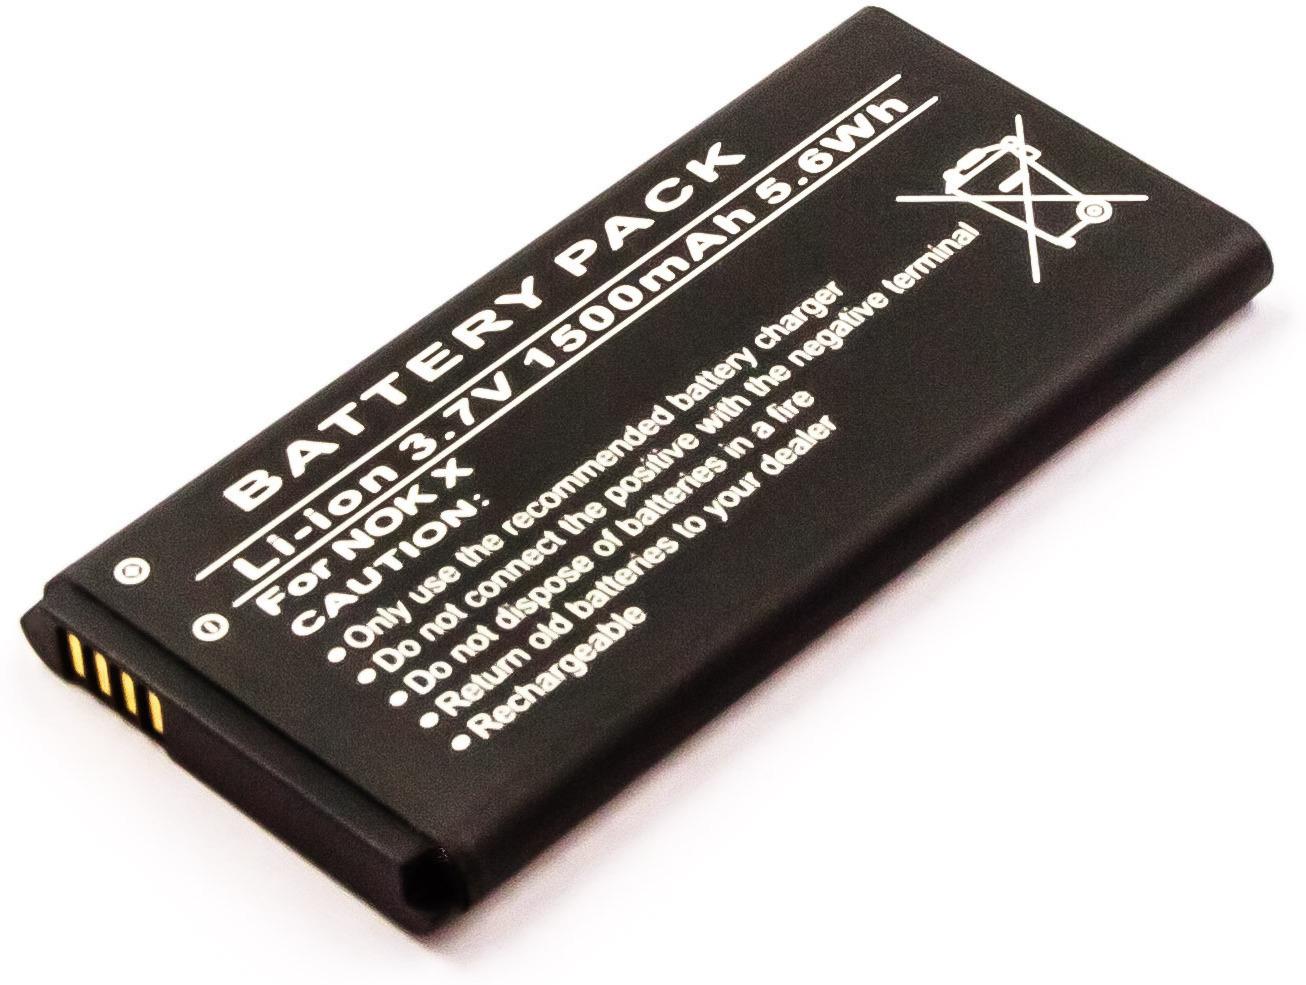 Mobile batteries. Аккумулятор BB- mobile ПРОГЛАЗОК W.H5.18. Lithium ion Battery Phone. X-Series model x27 аккумулятор. Battery Chip ba27 инструкция.